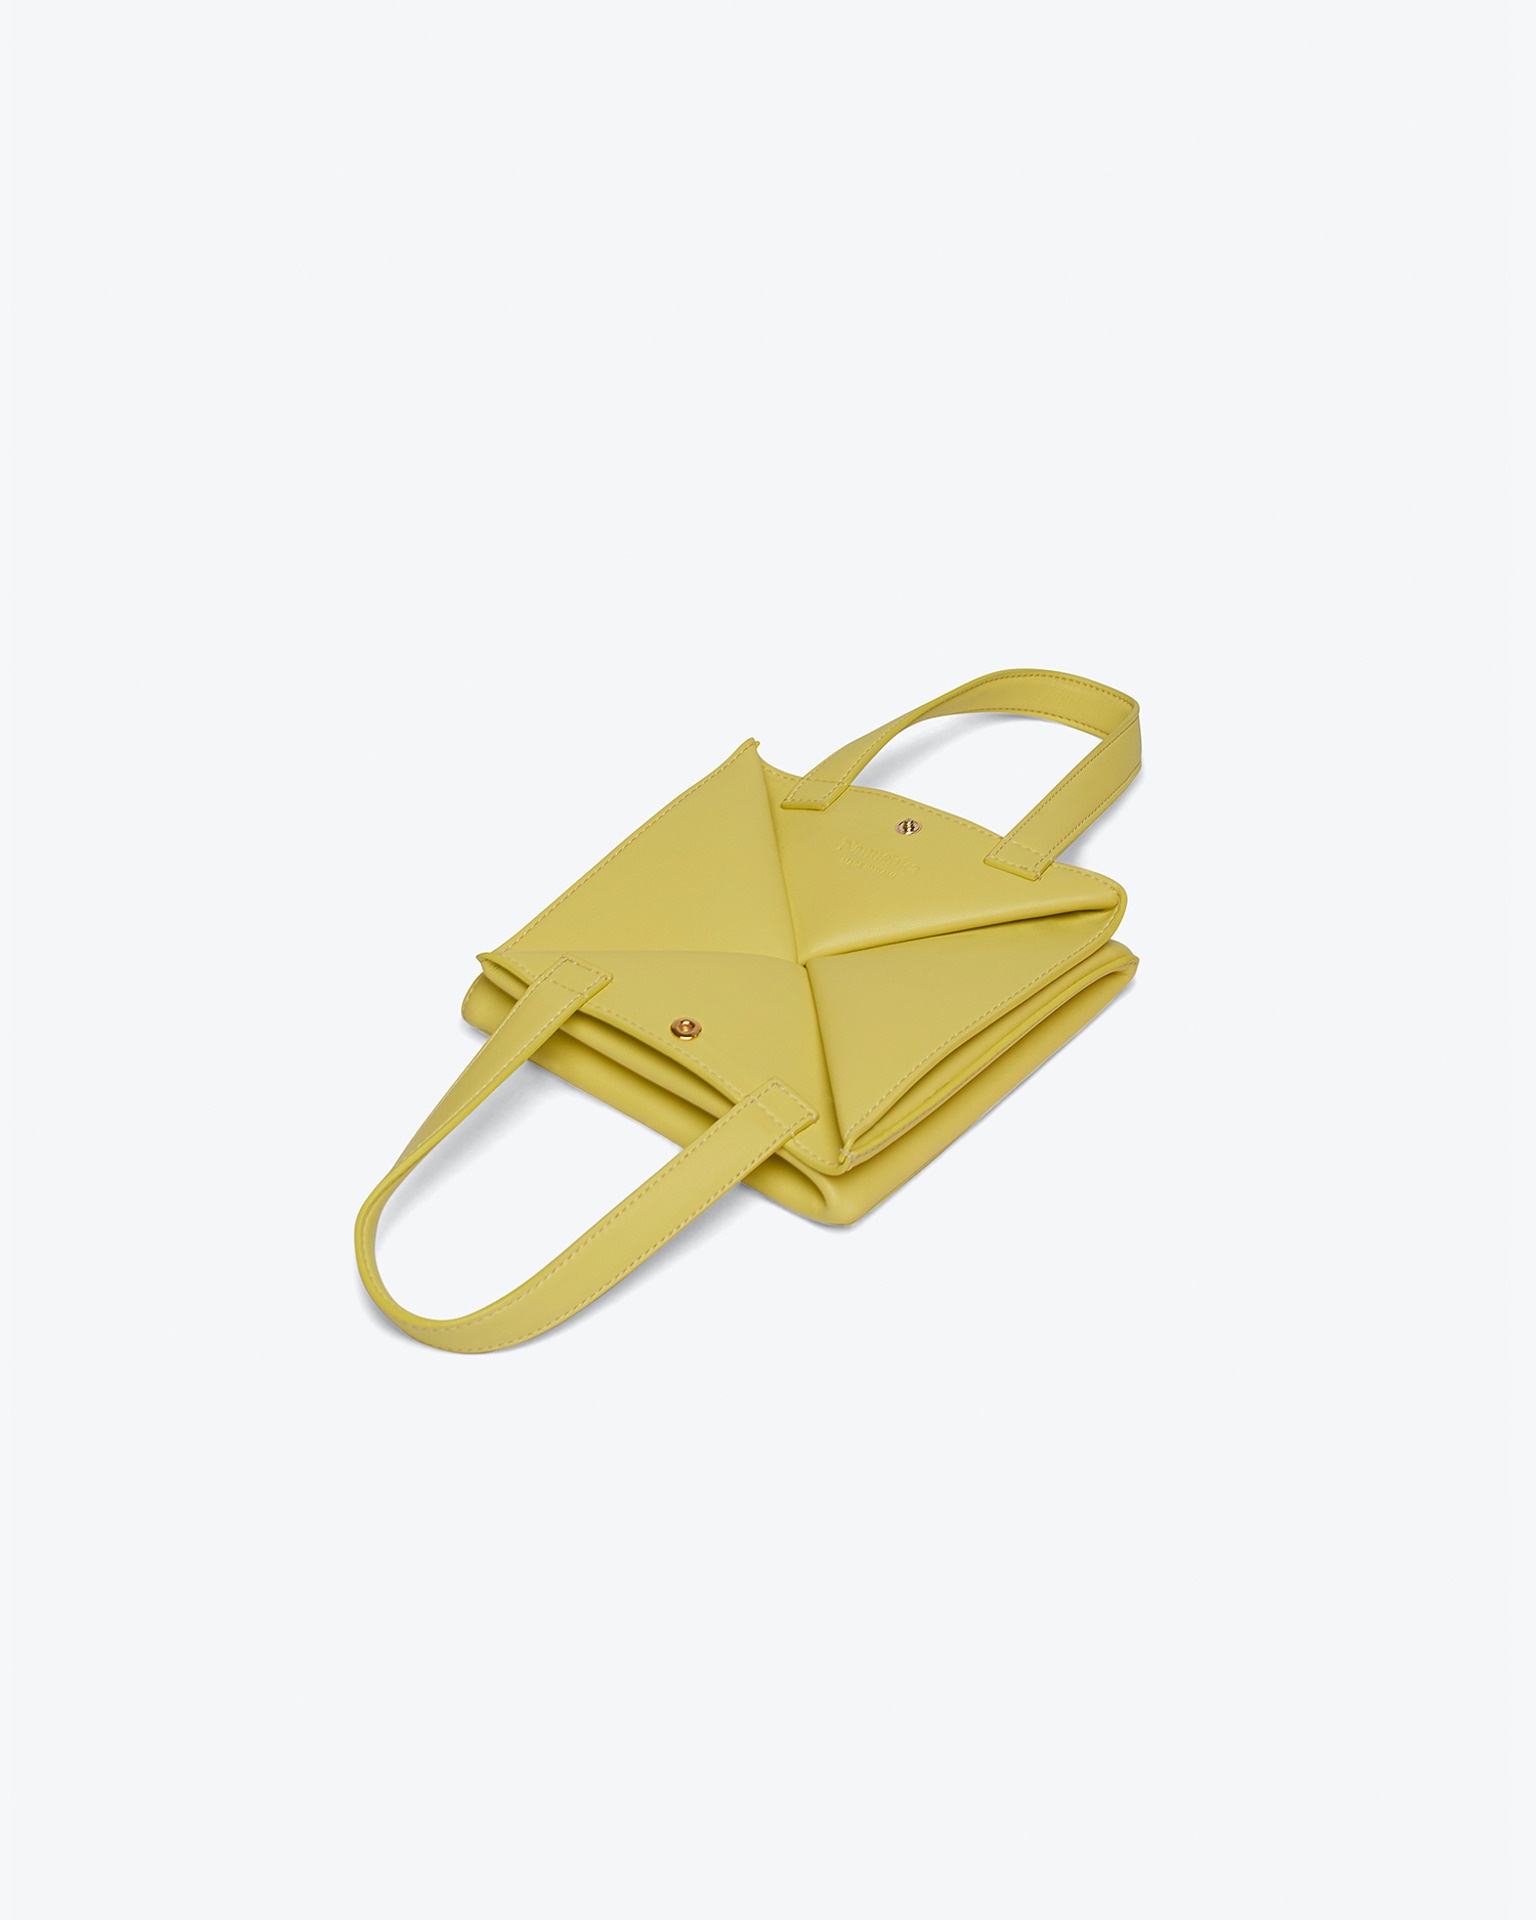 THE ORIGAMI MINI - Origami mini tote - Yellow - 2